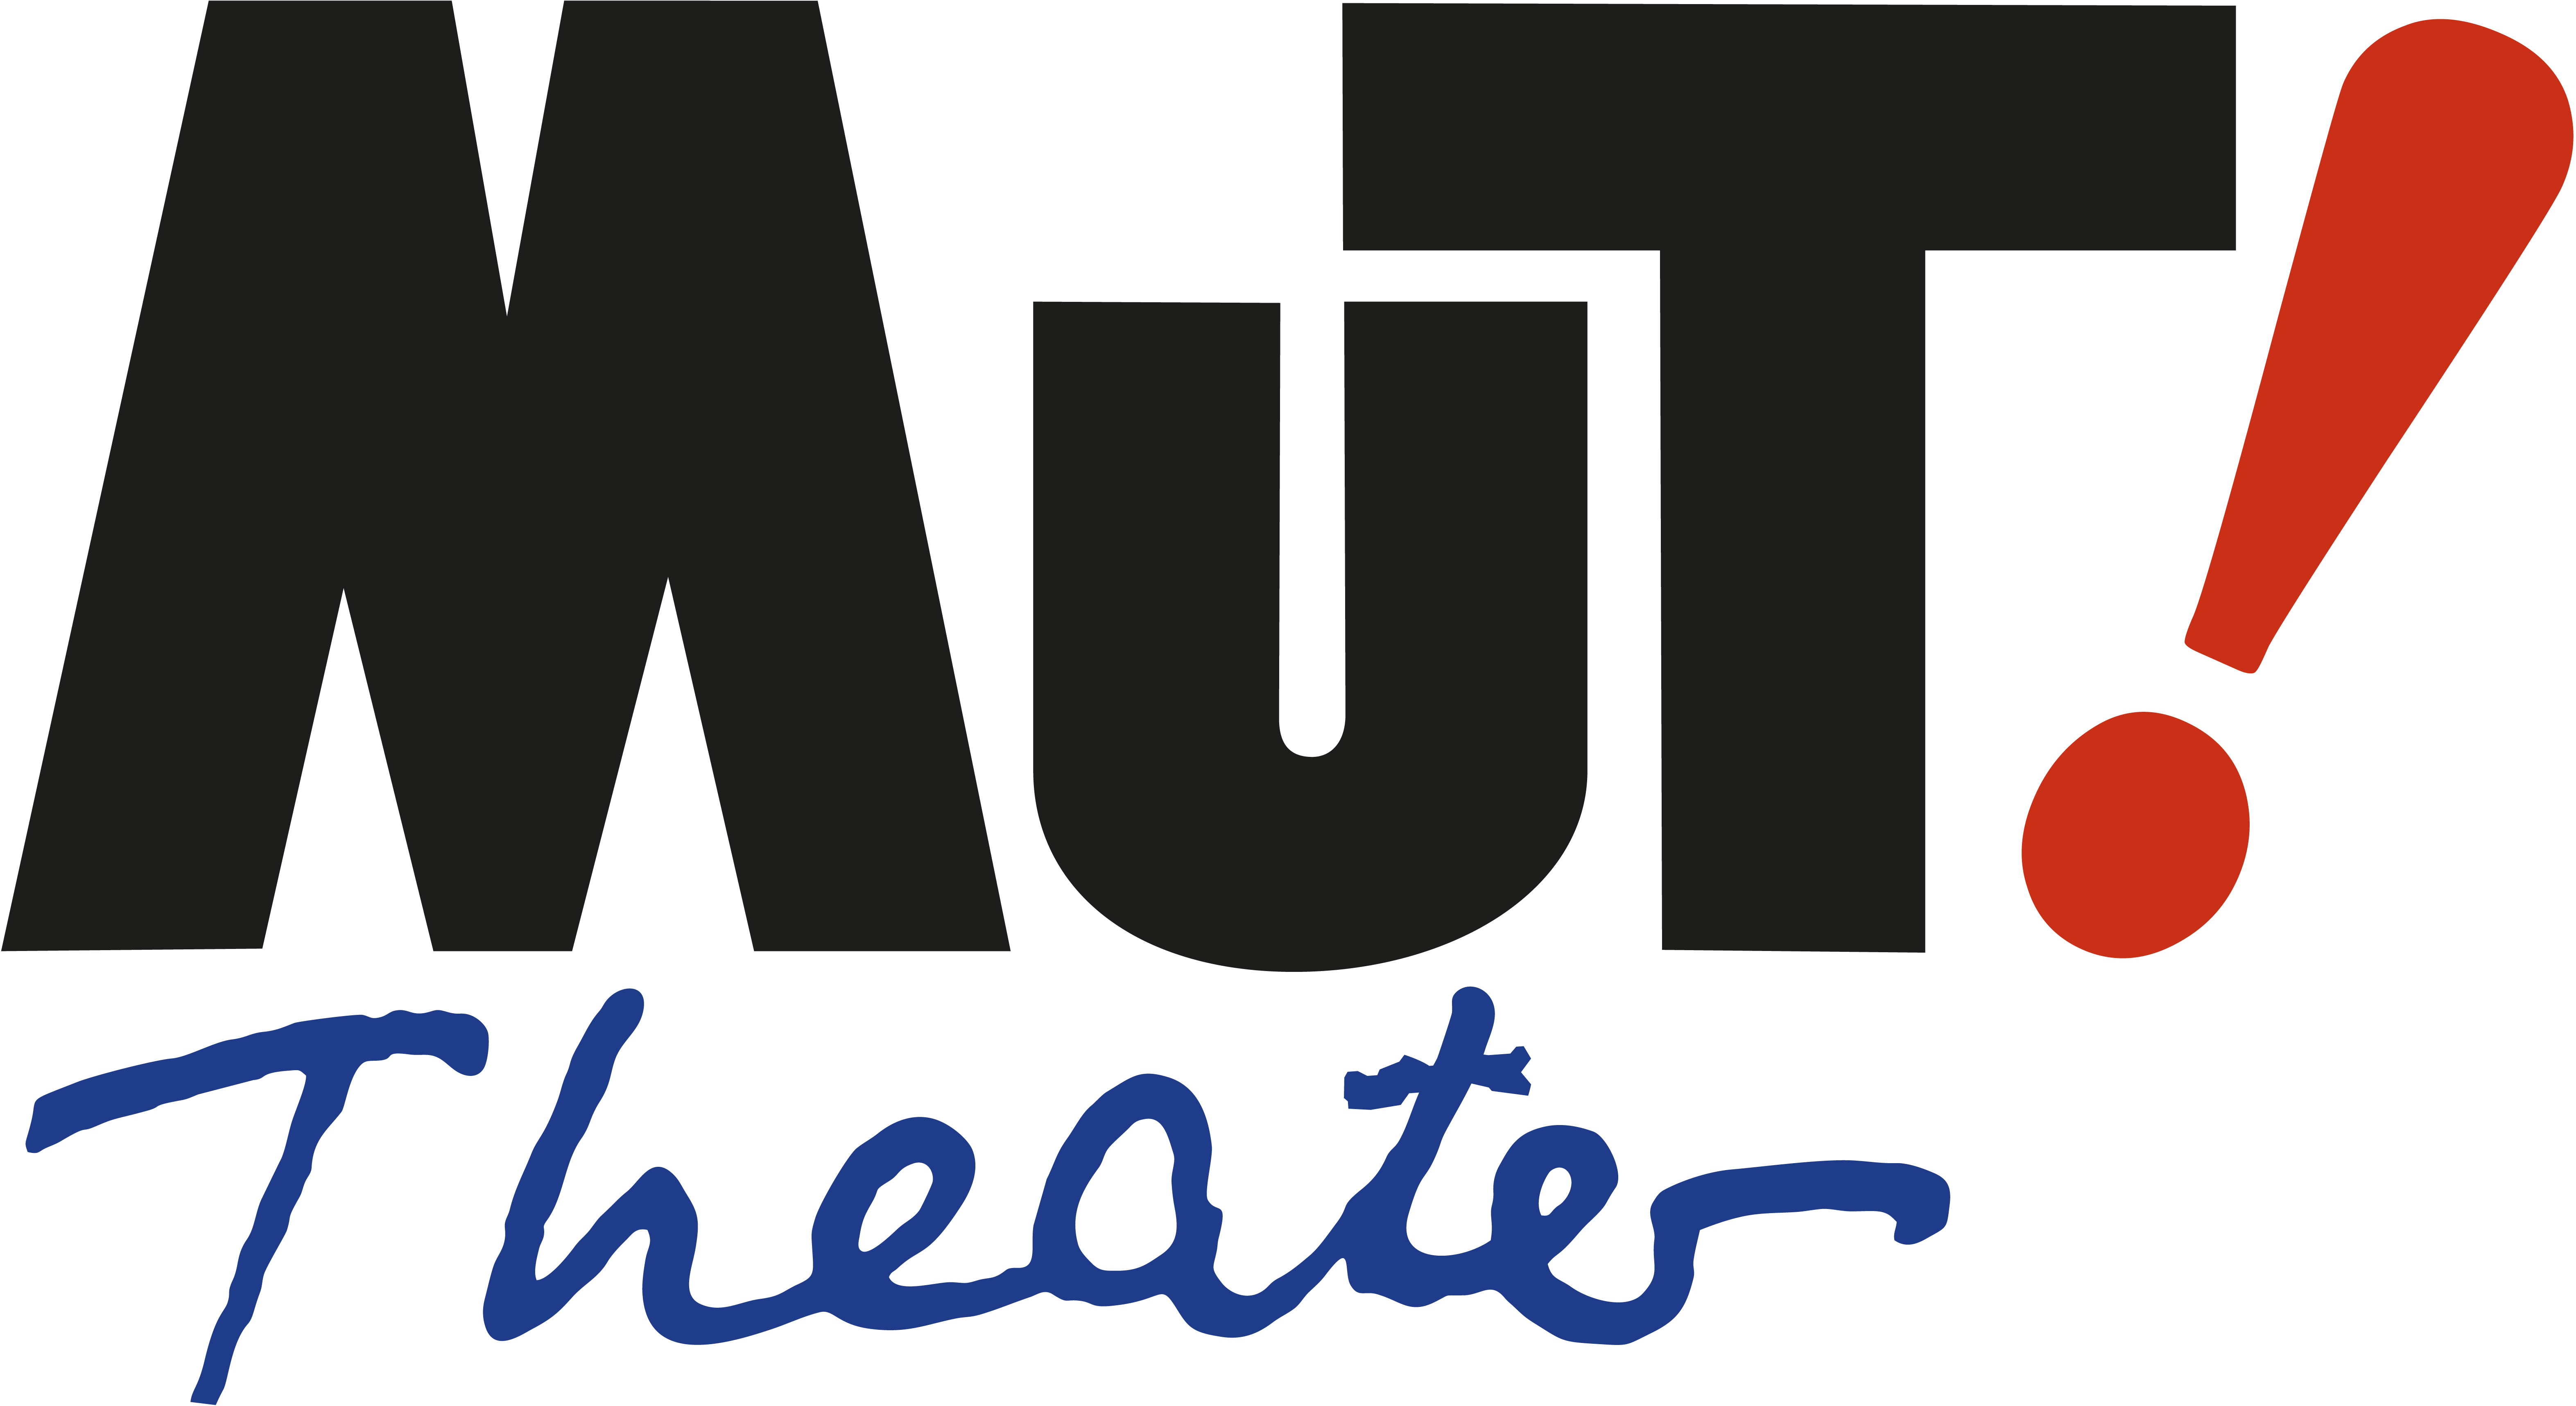 MUT! Theater